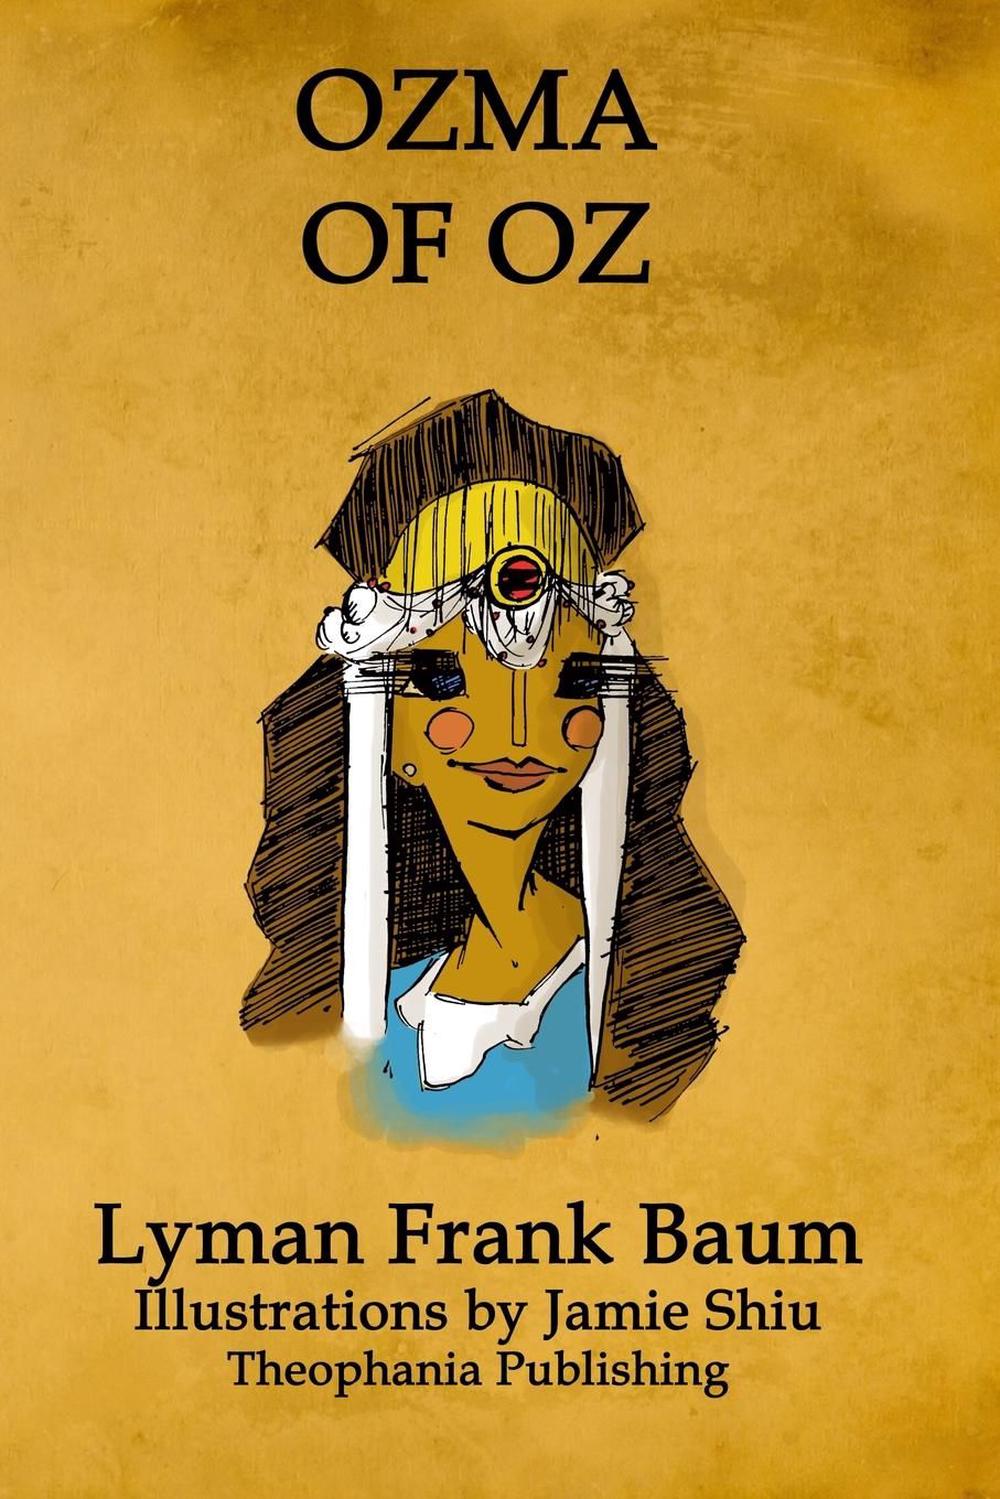 l.frank baum complete oz series